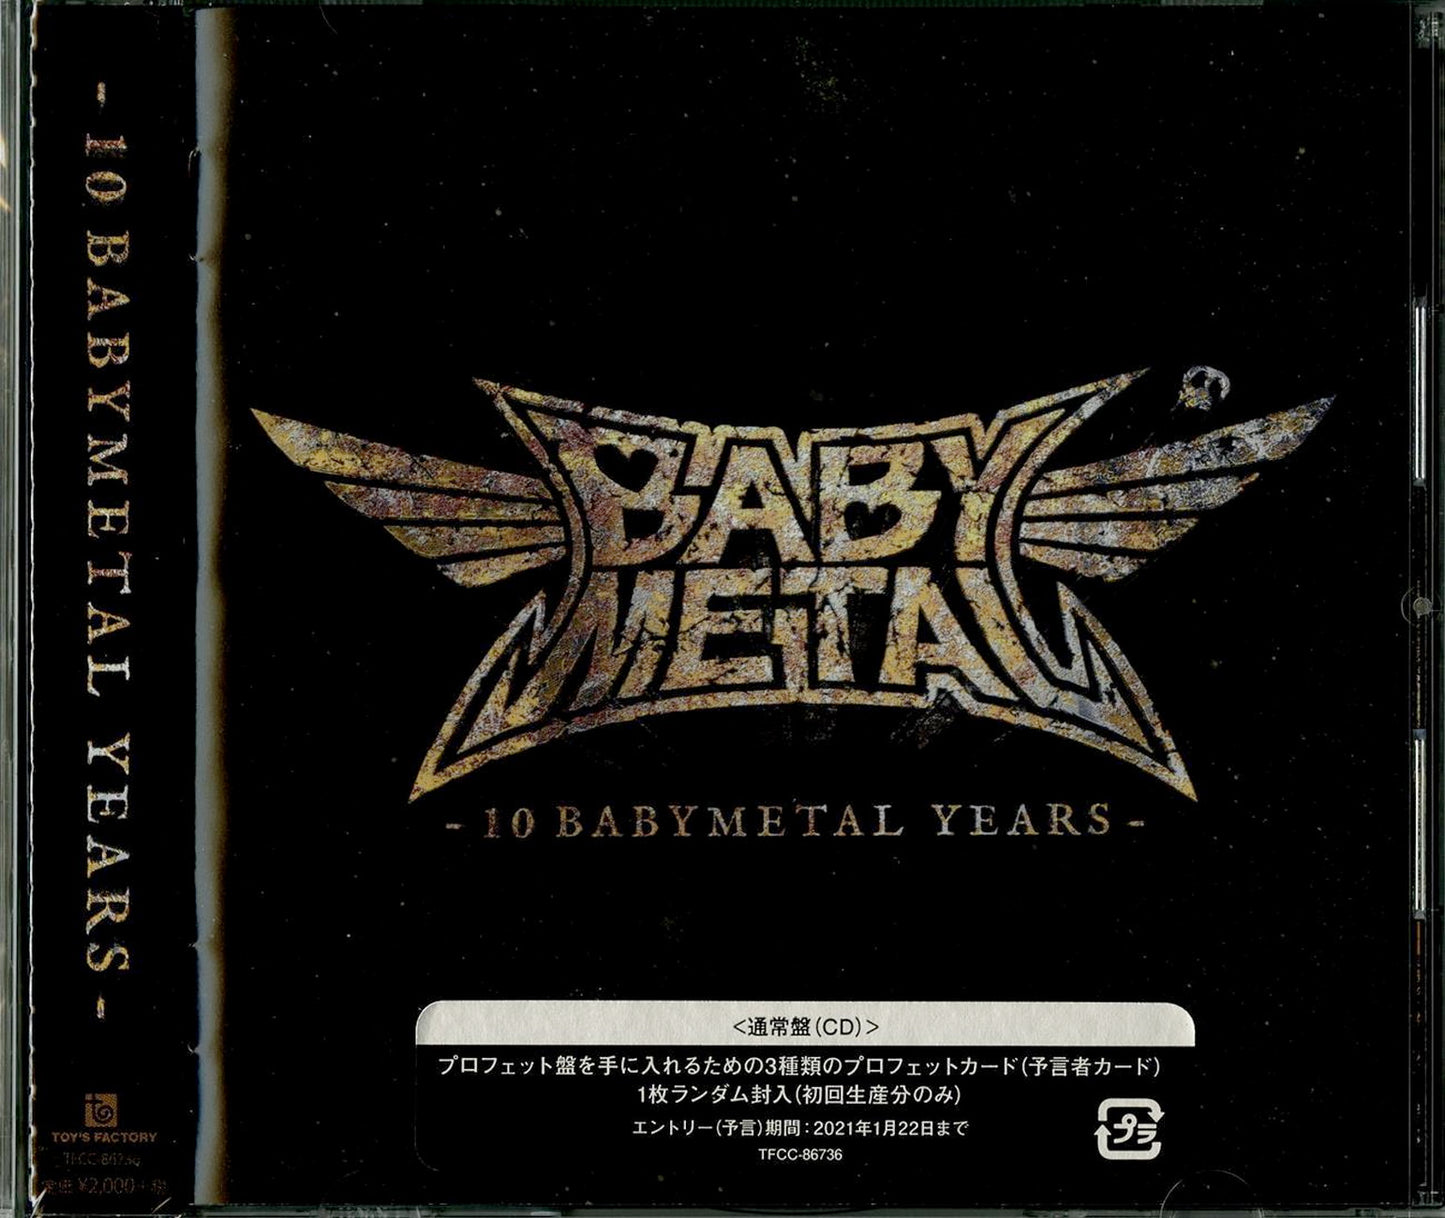 Babymetal - 10 Babymetal Years - Japan CD